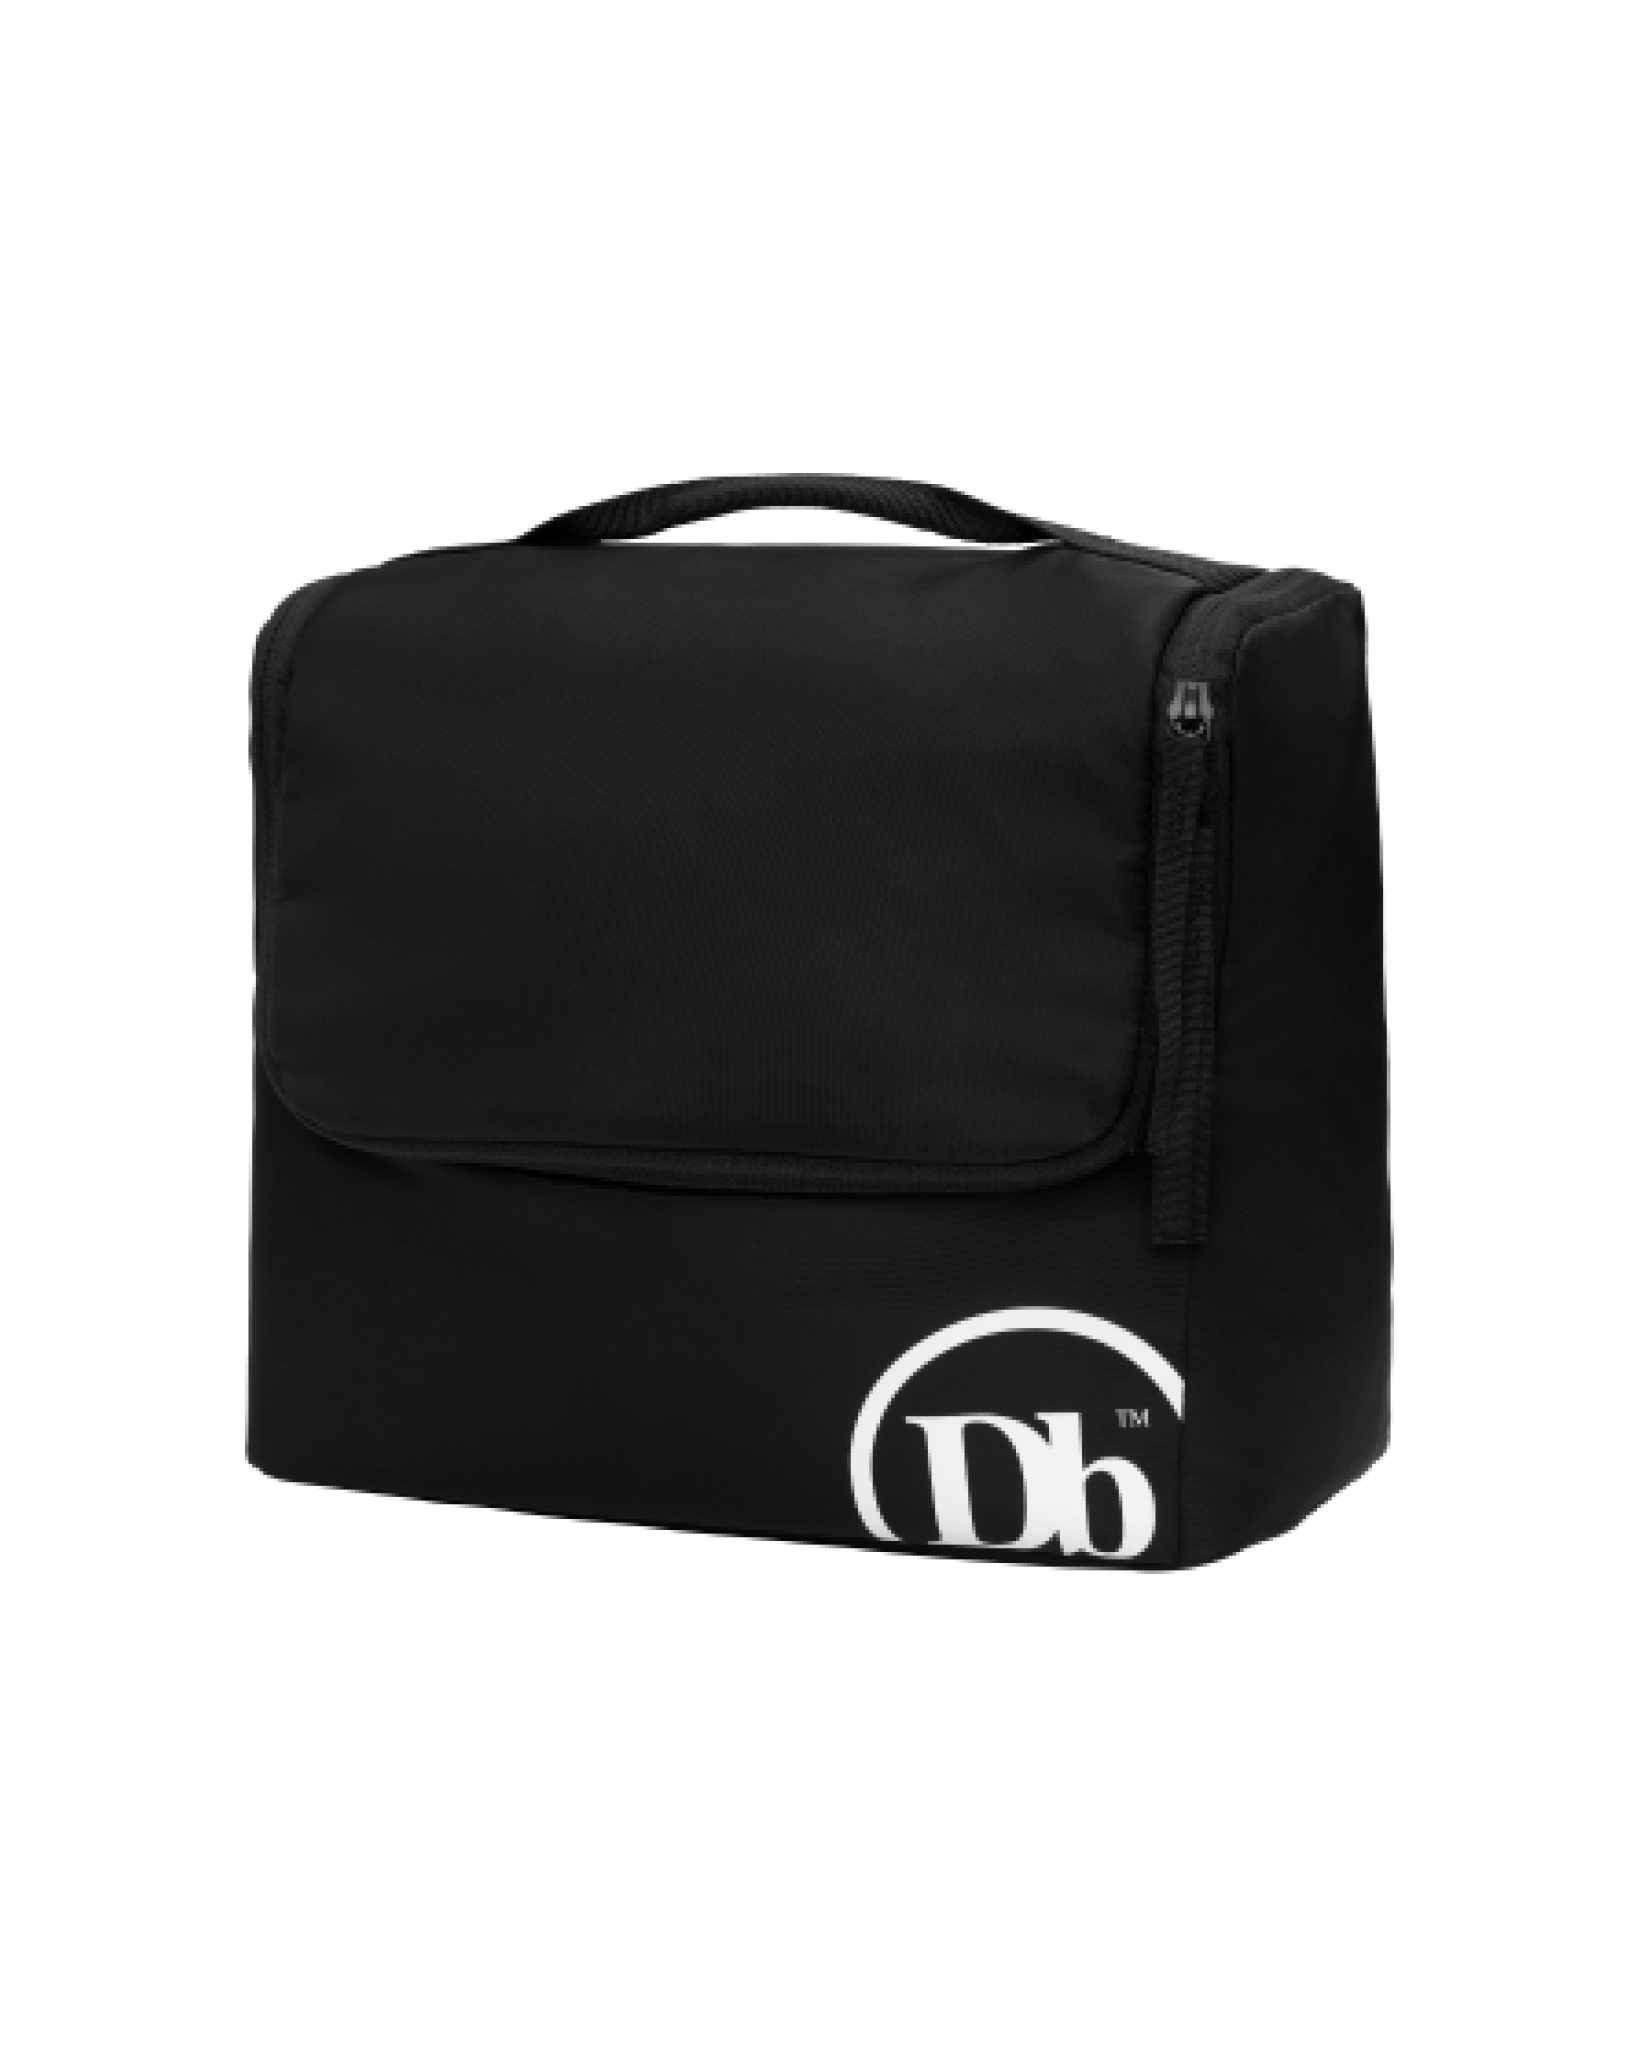 Essential Wash Bag 1St Generation M Black Out - Black Out